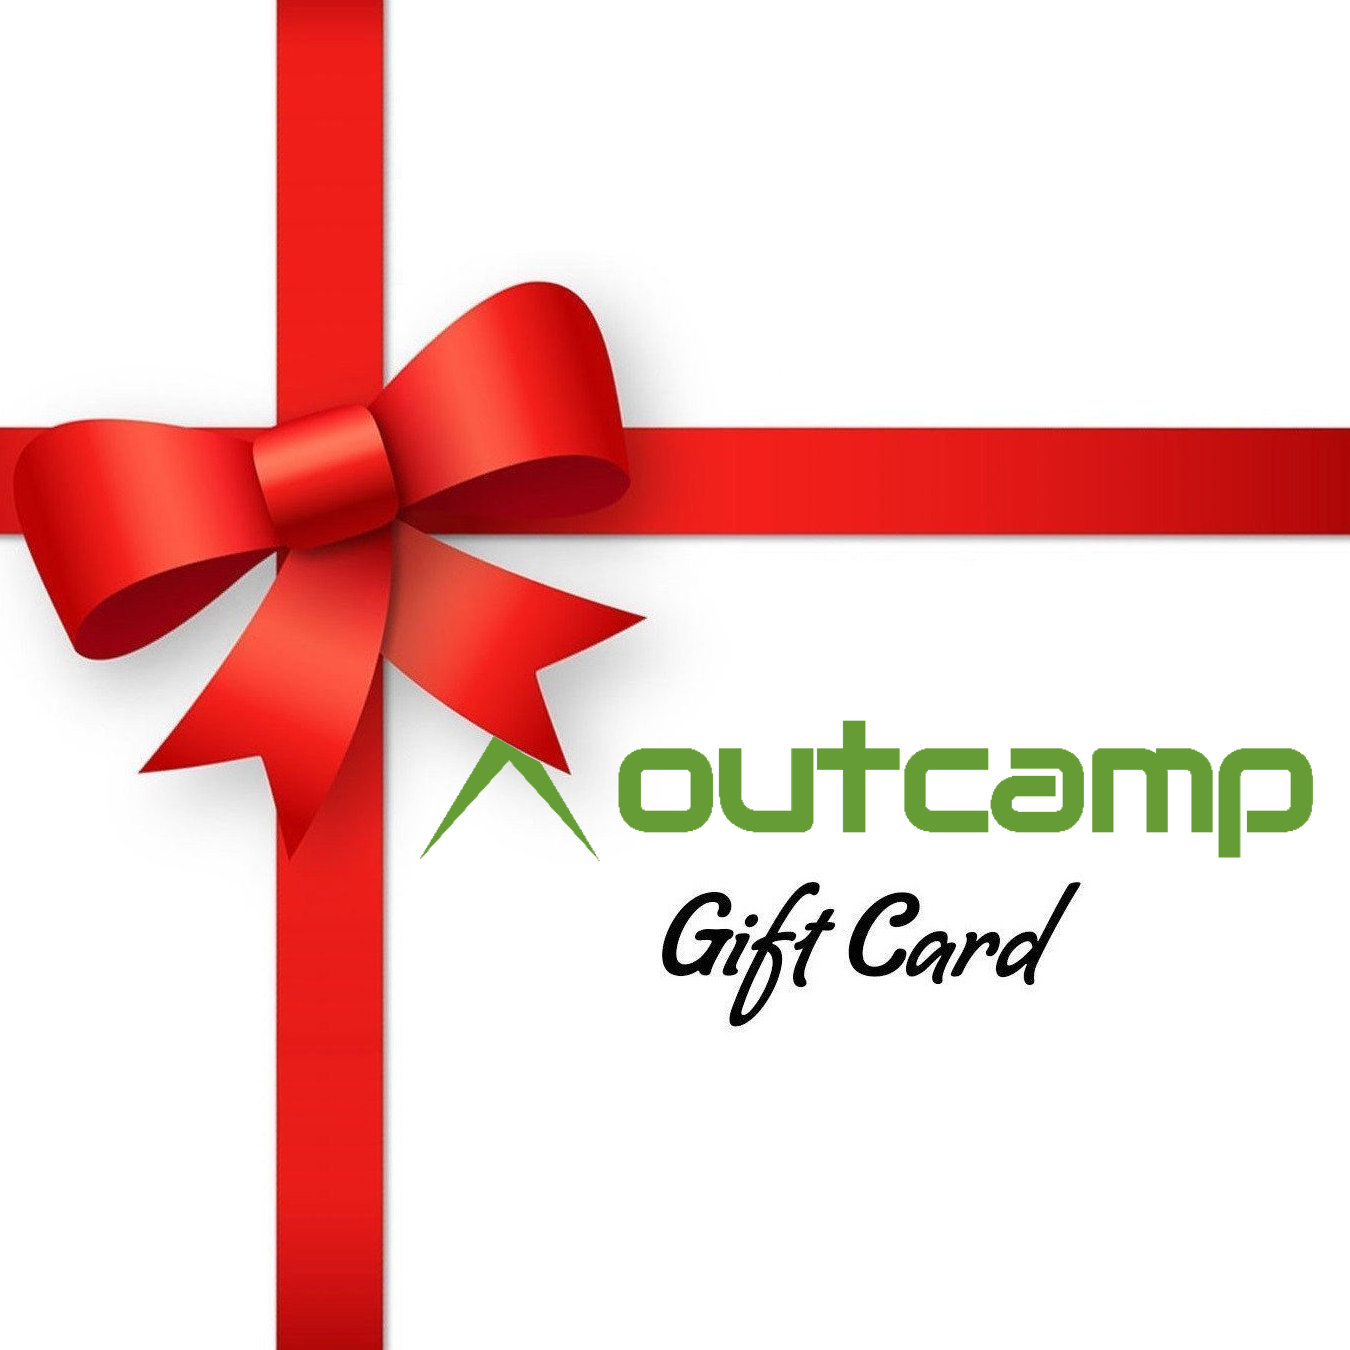 Outcamp Gift Card